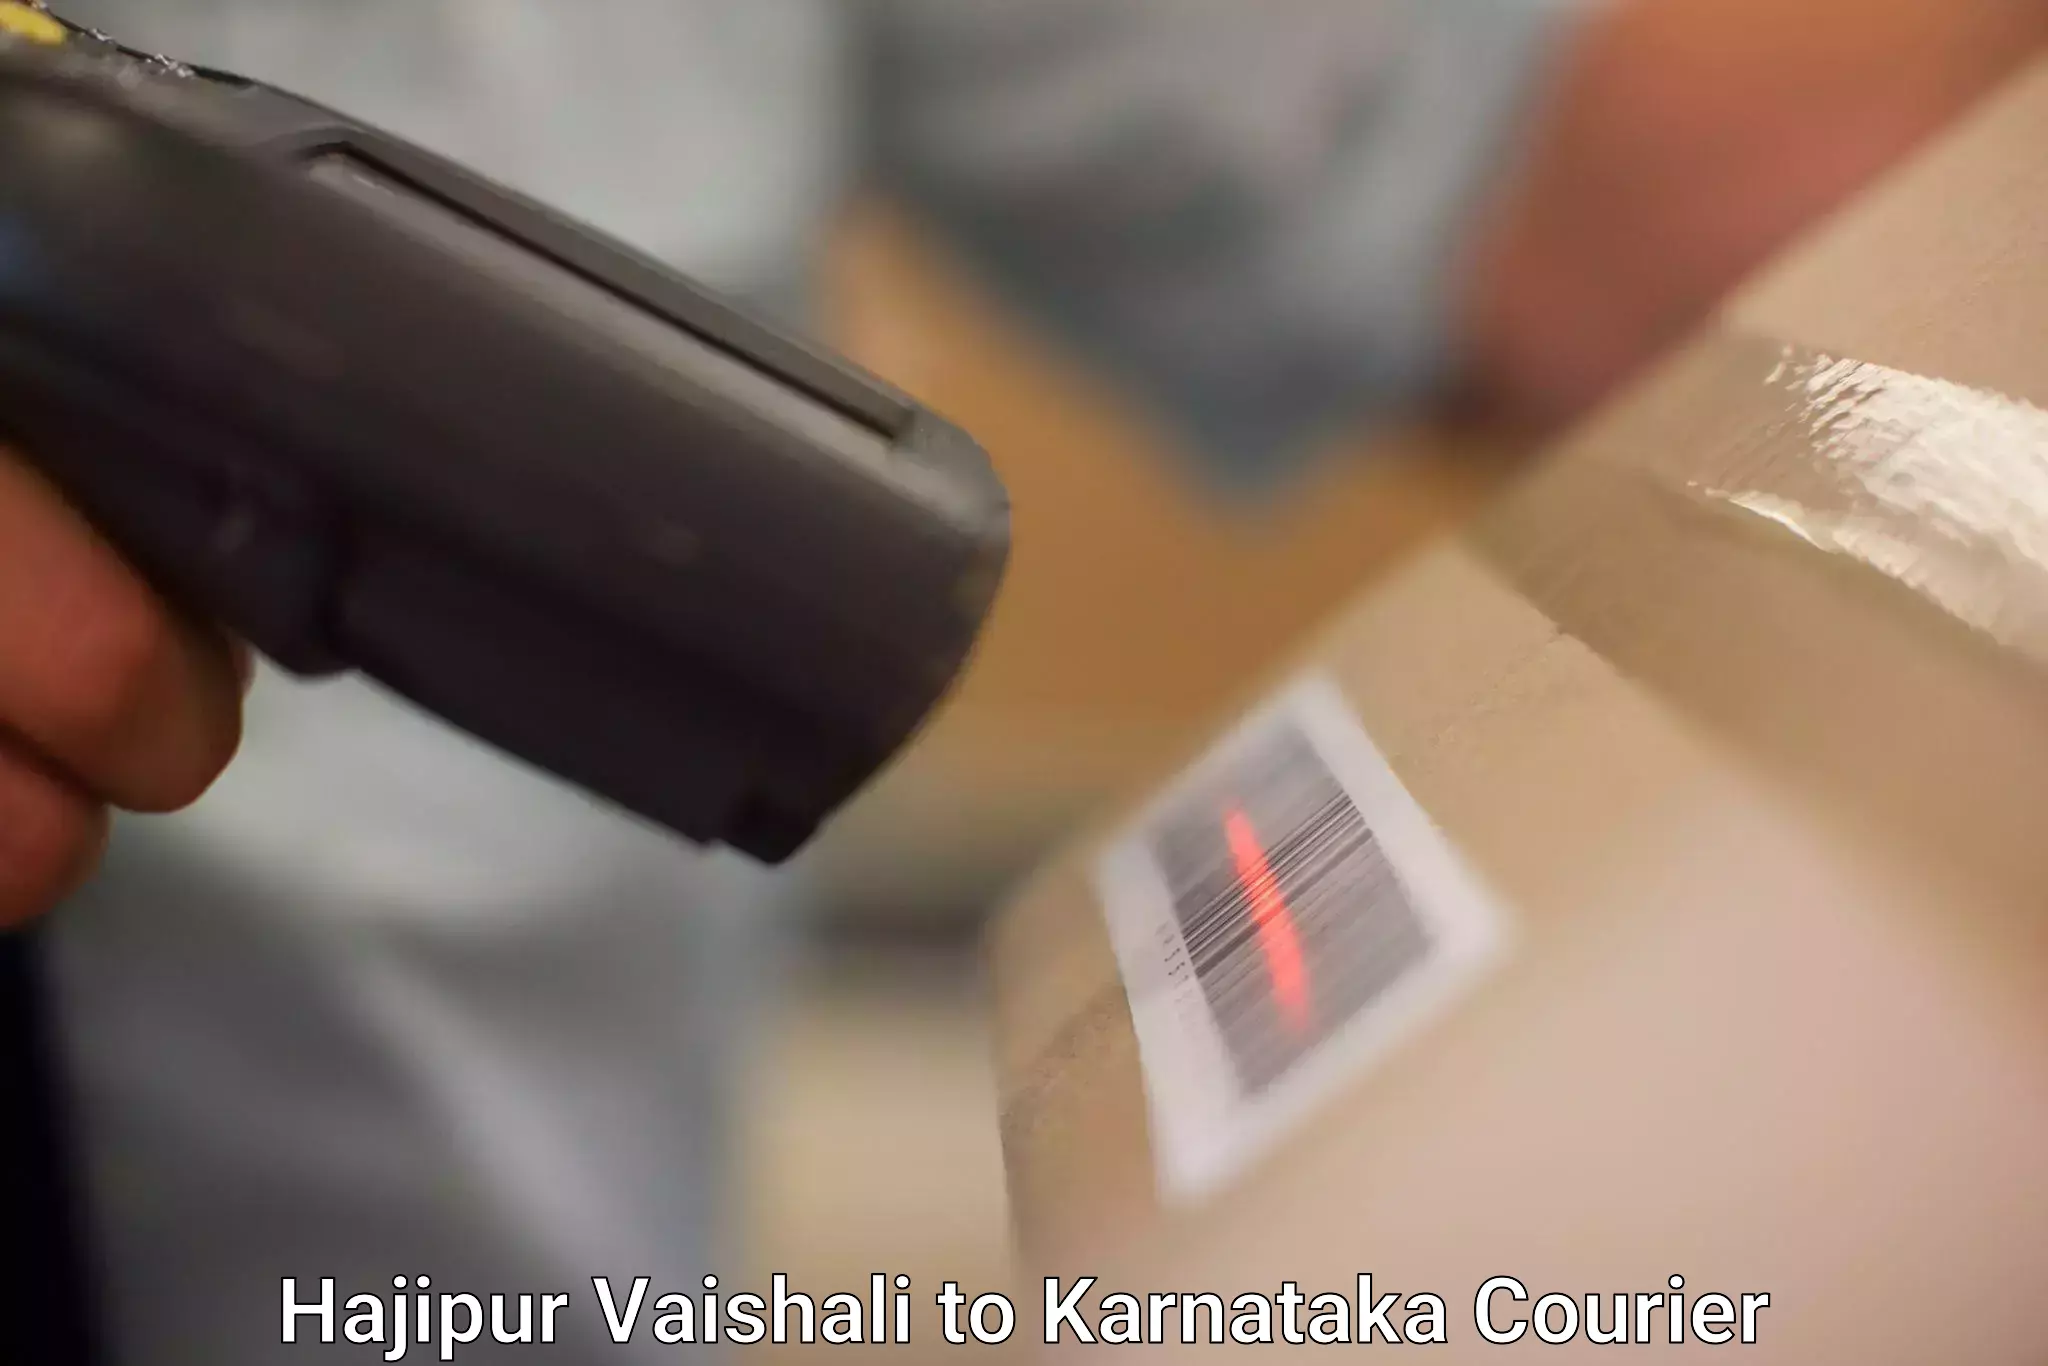 Premium courier services Hajipur Vaishali to Channarayapatna